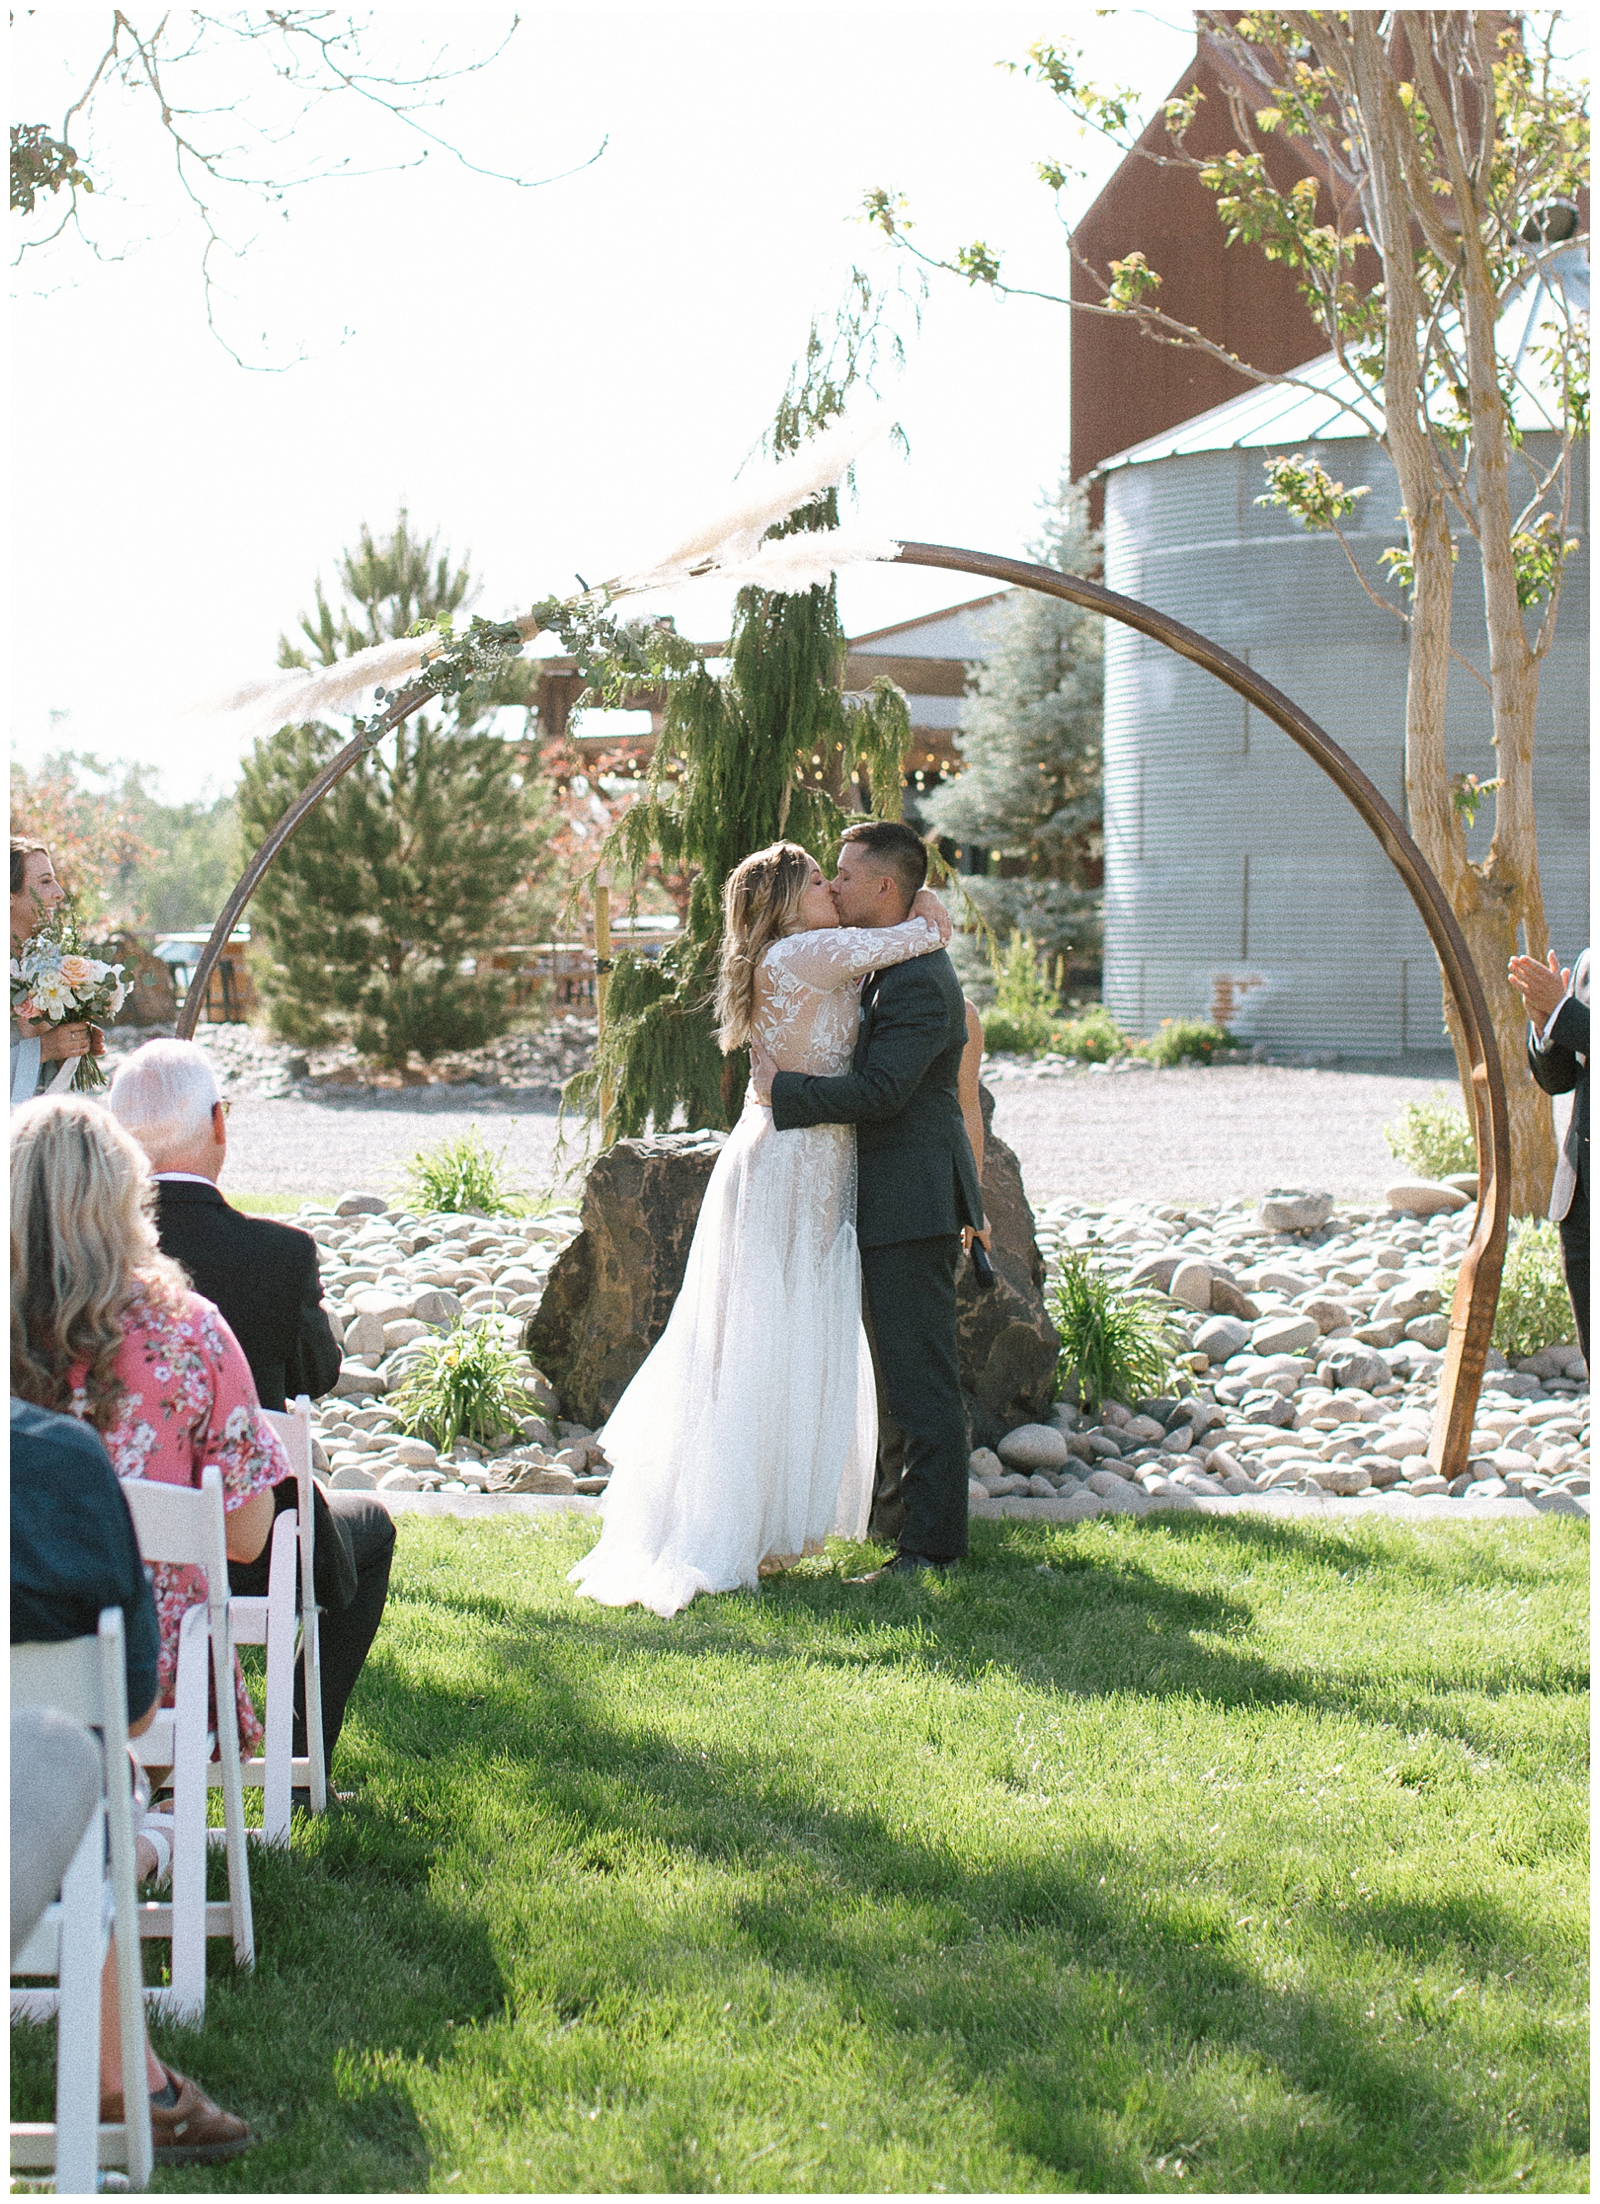 Echo Ridge Cellars Outdoor Wedding Ceremony